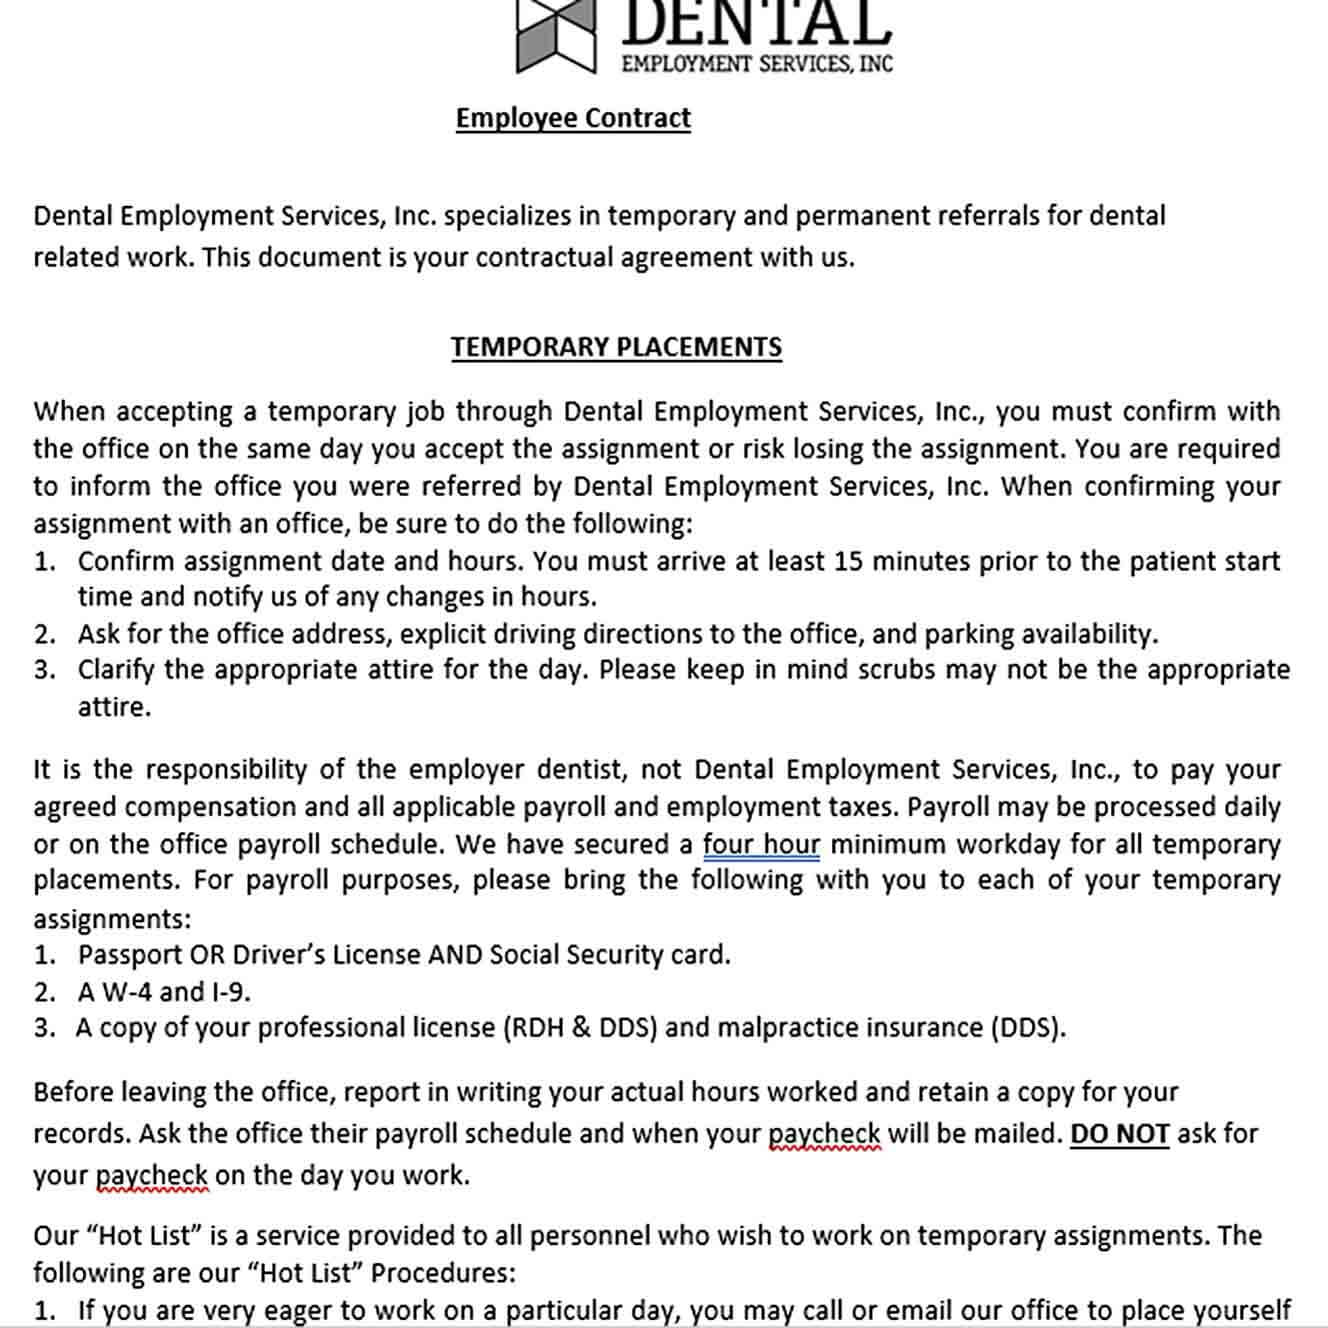 Sample Dental Employee Contract Agreement